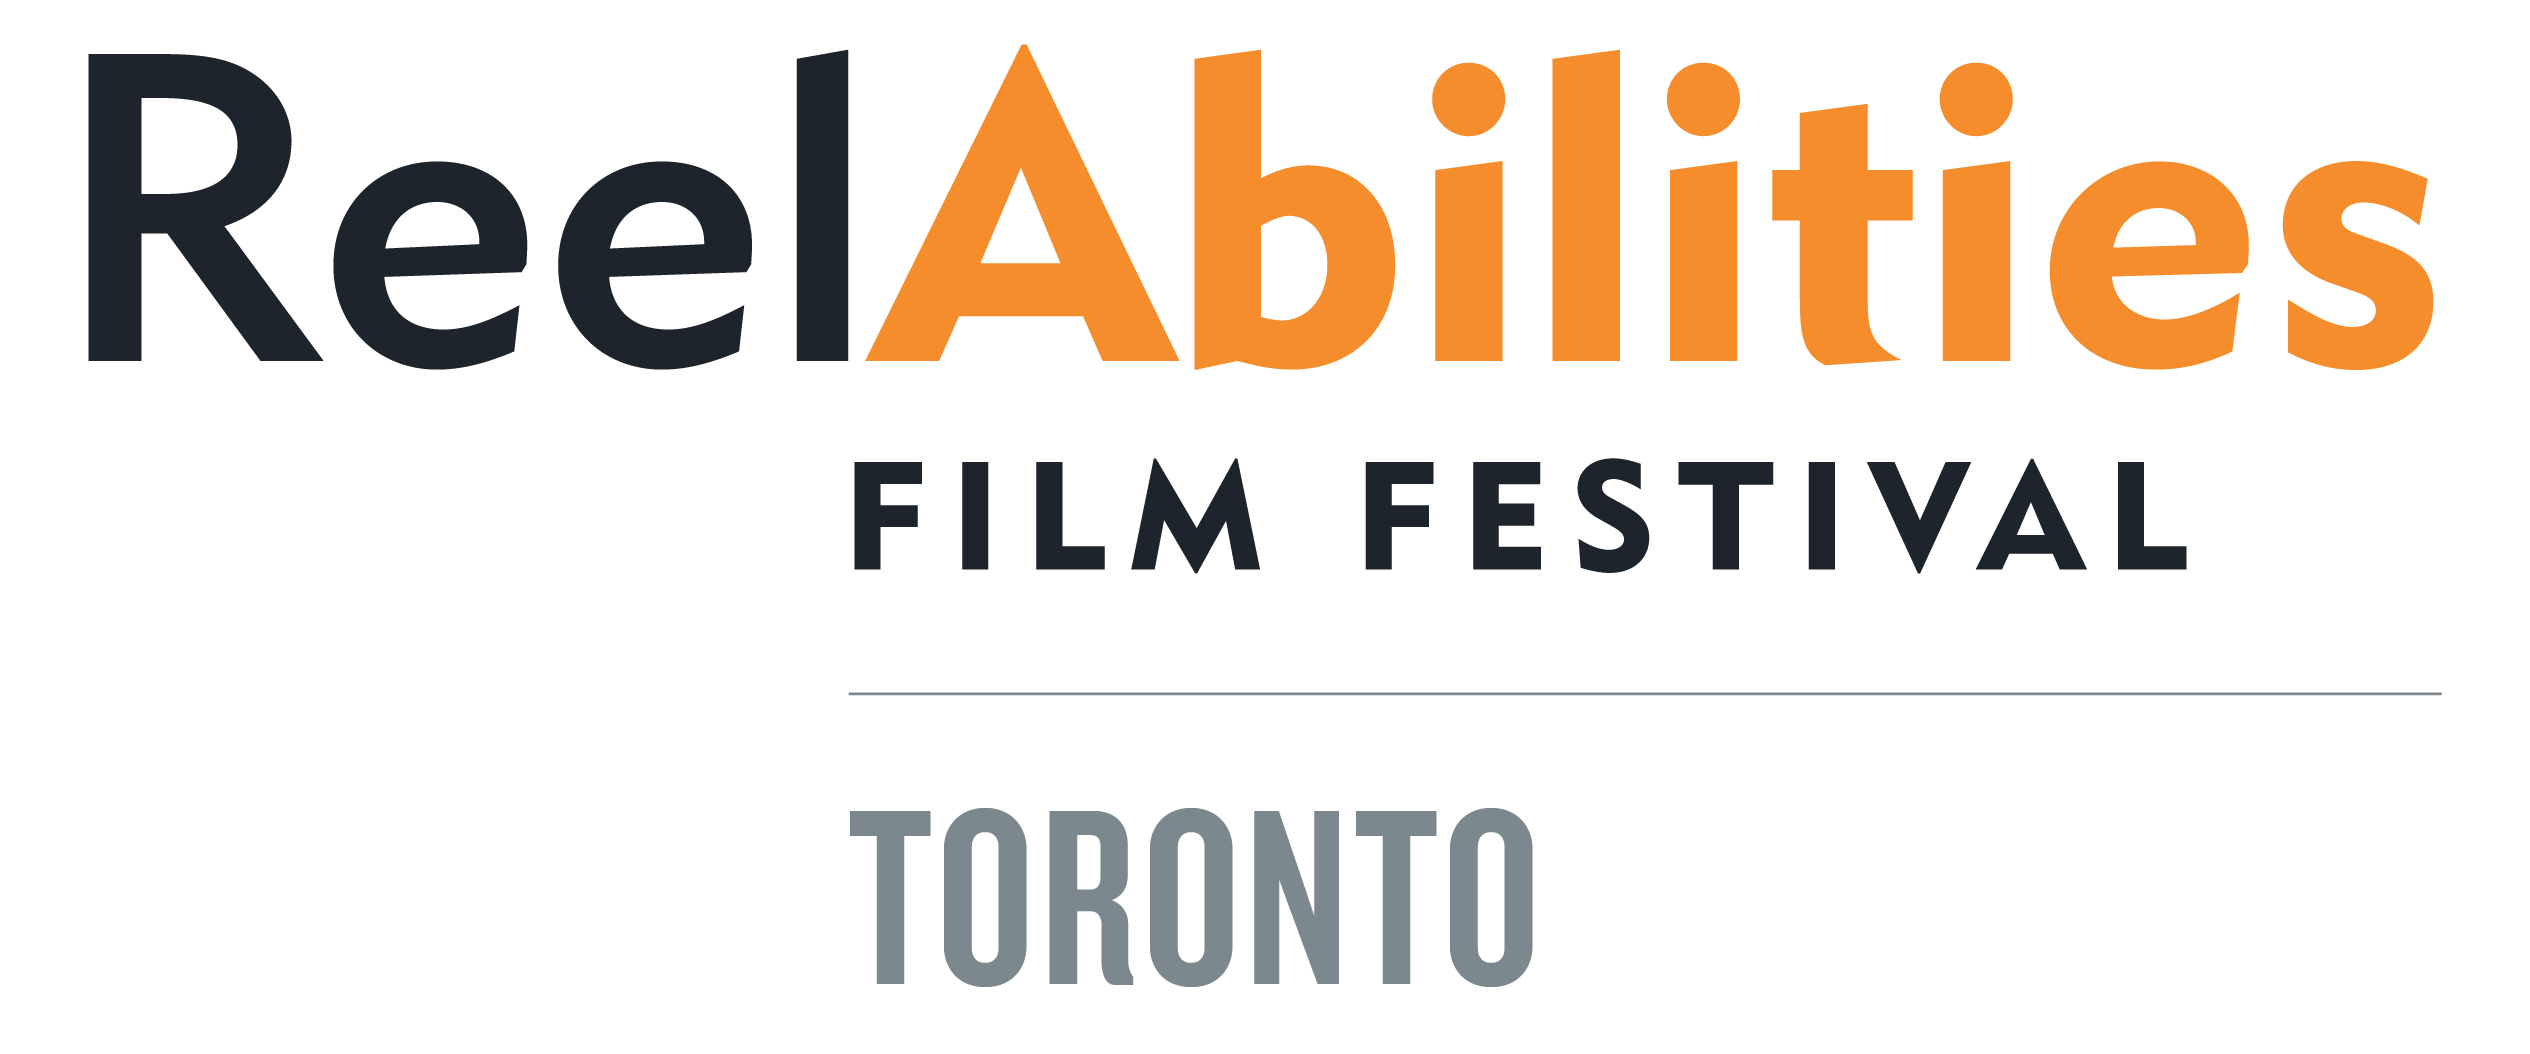 ReelAbilities Film Festival Toronto 2022